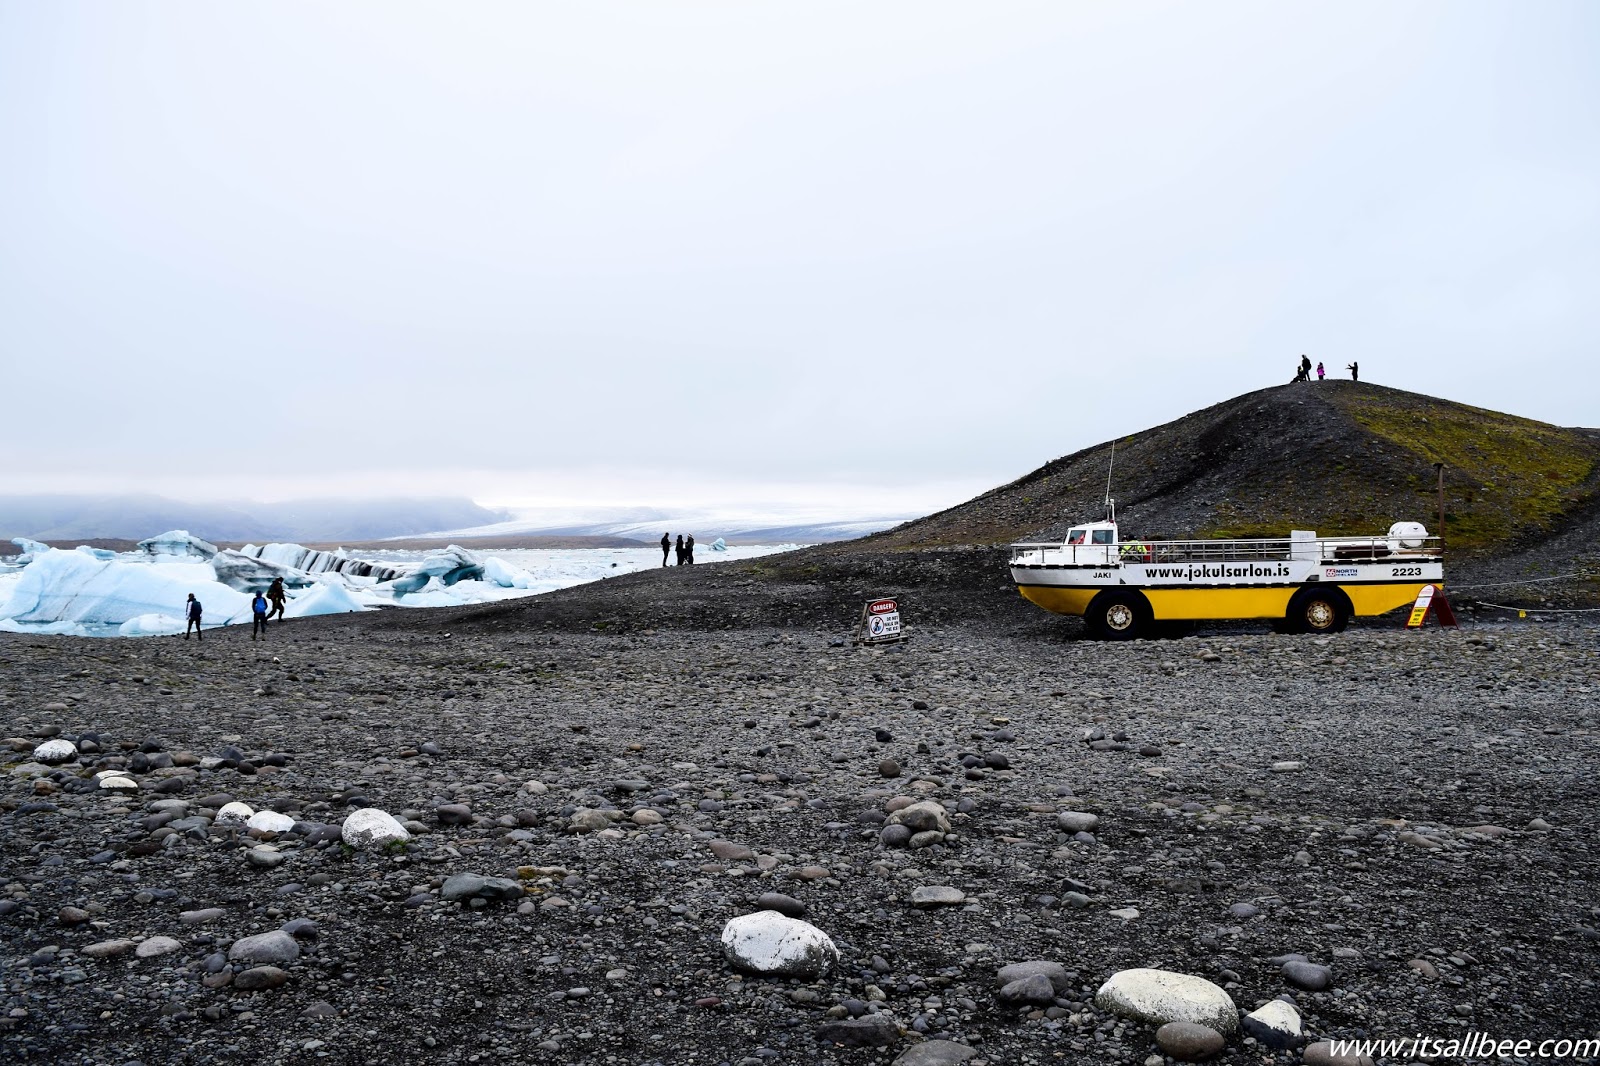 Jokulsarlon Glacier Lagoon Boat Tours | Visiting Iceland's Glacier Lagoon